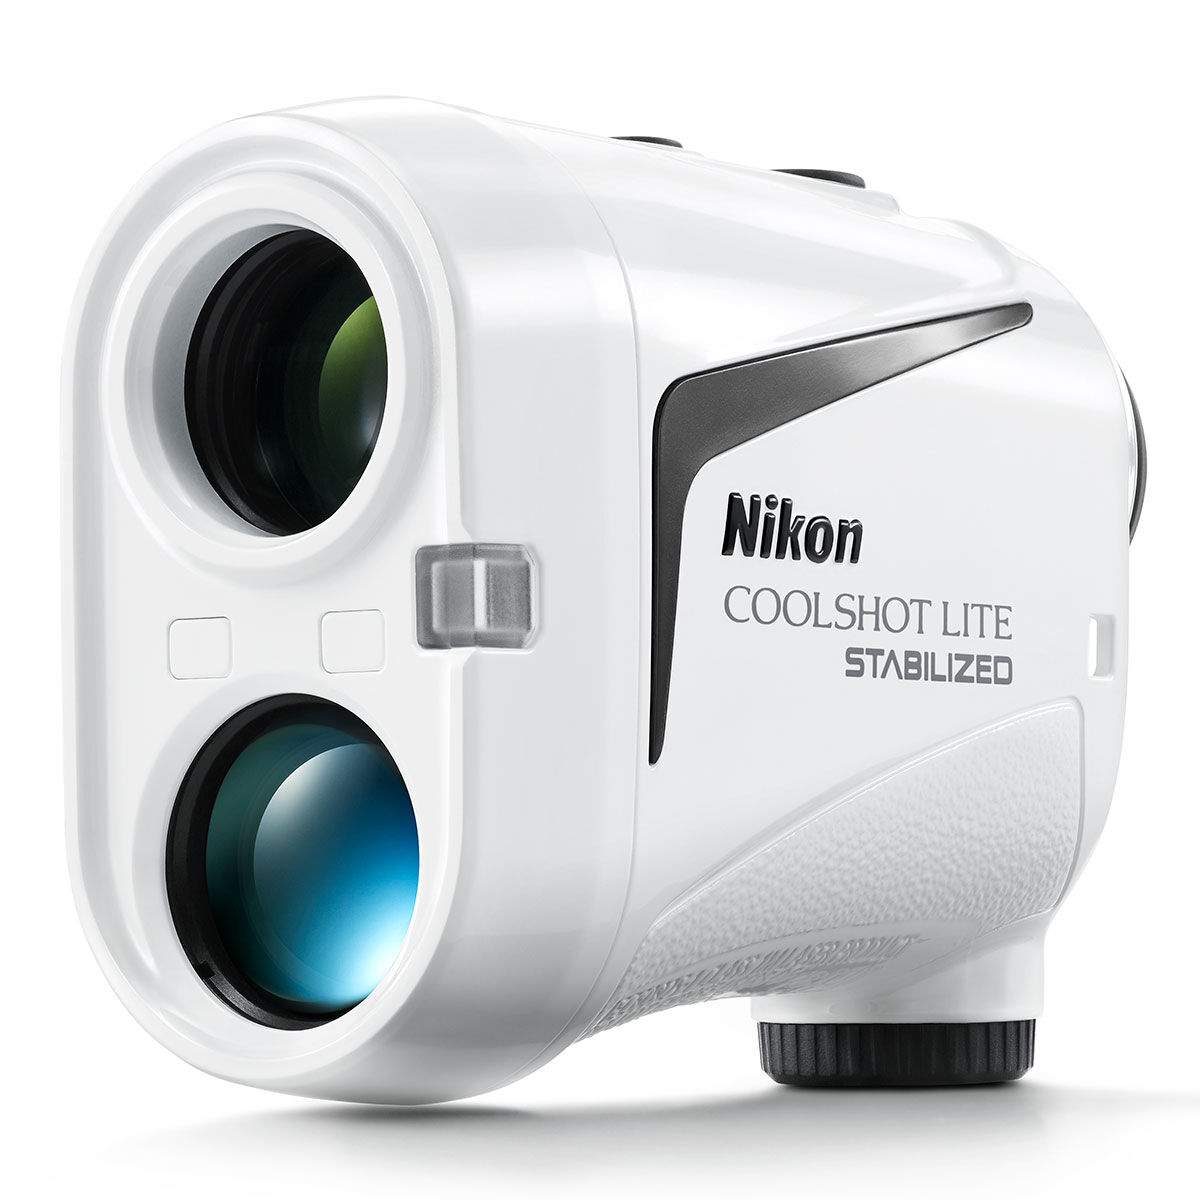 Nikon Mens White and Black Coolshot Lite Stabilizer Golf Rangefinder | American Golf, One Size